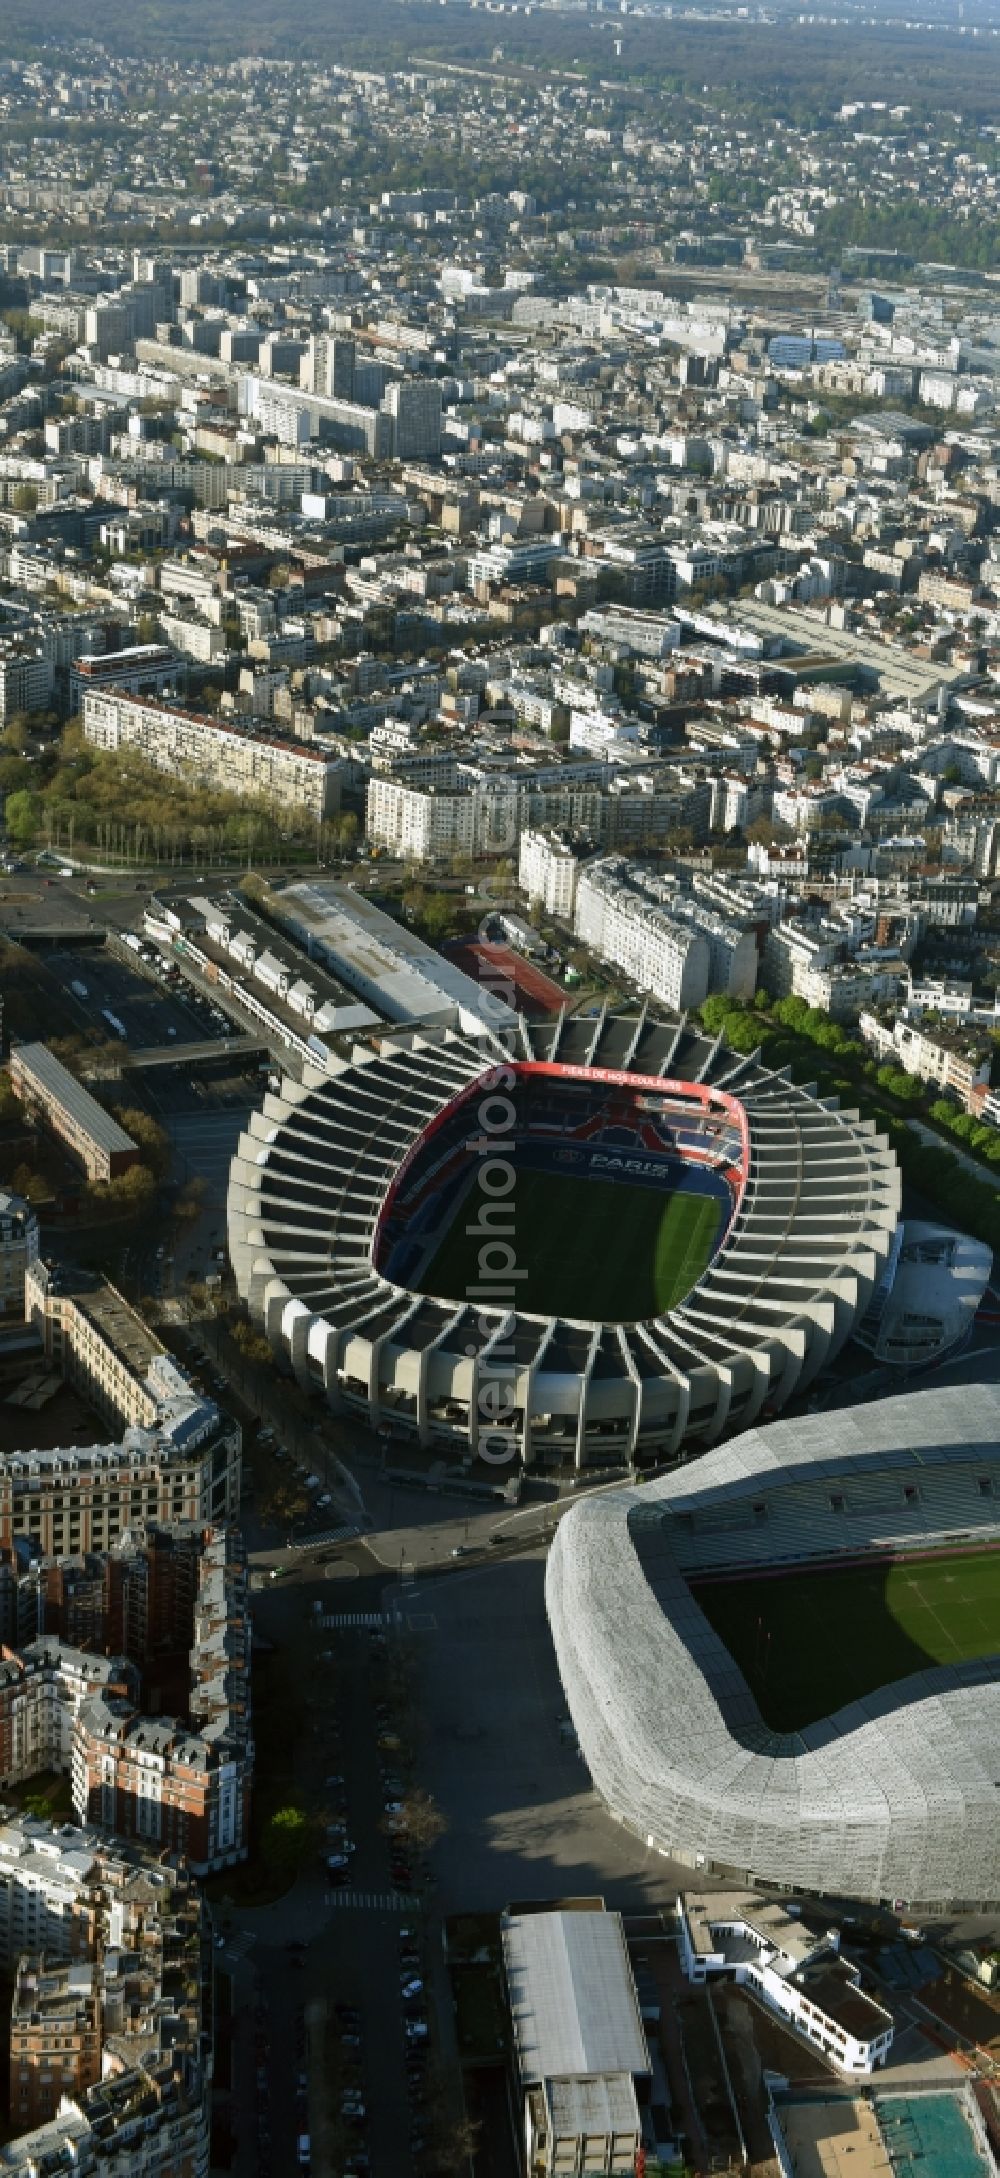 Paris from the bird's eye view: Sports facility grounds of the arena of the stadium Parc des Princes on Rue du Commandant Guilbaud in Paris Boulogne-Billancourt, Ile-de-France, France